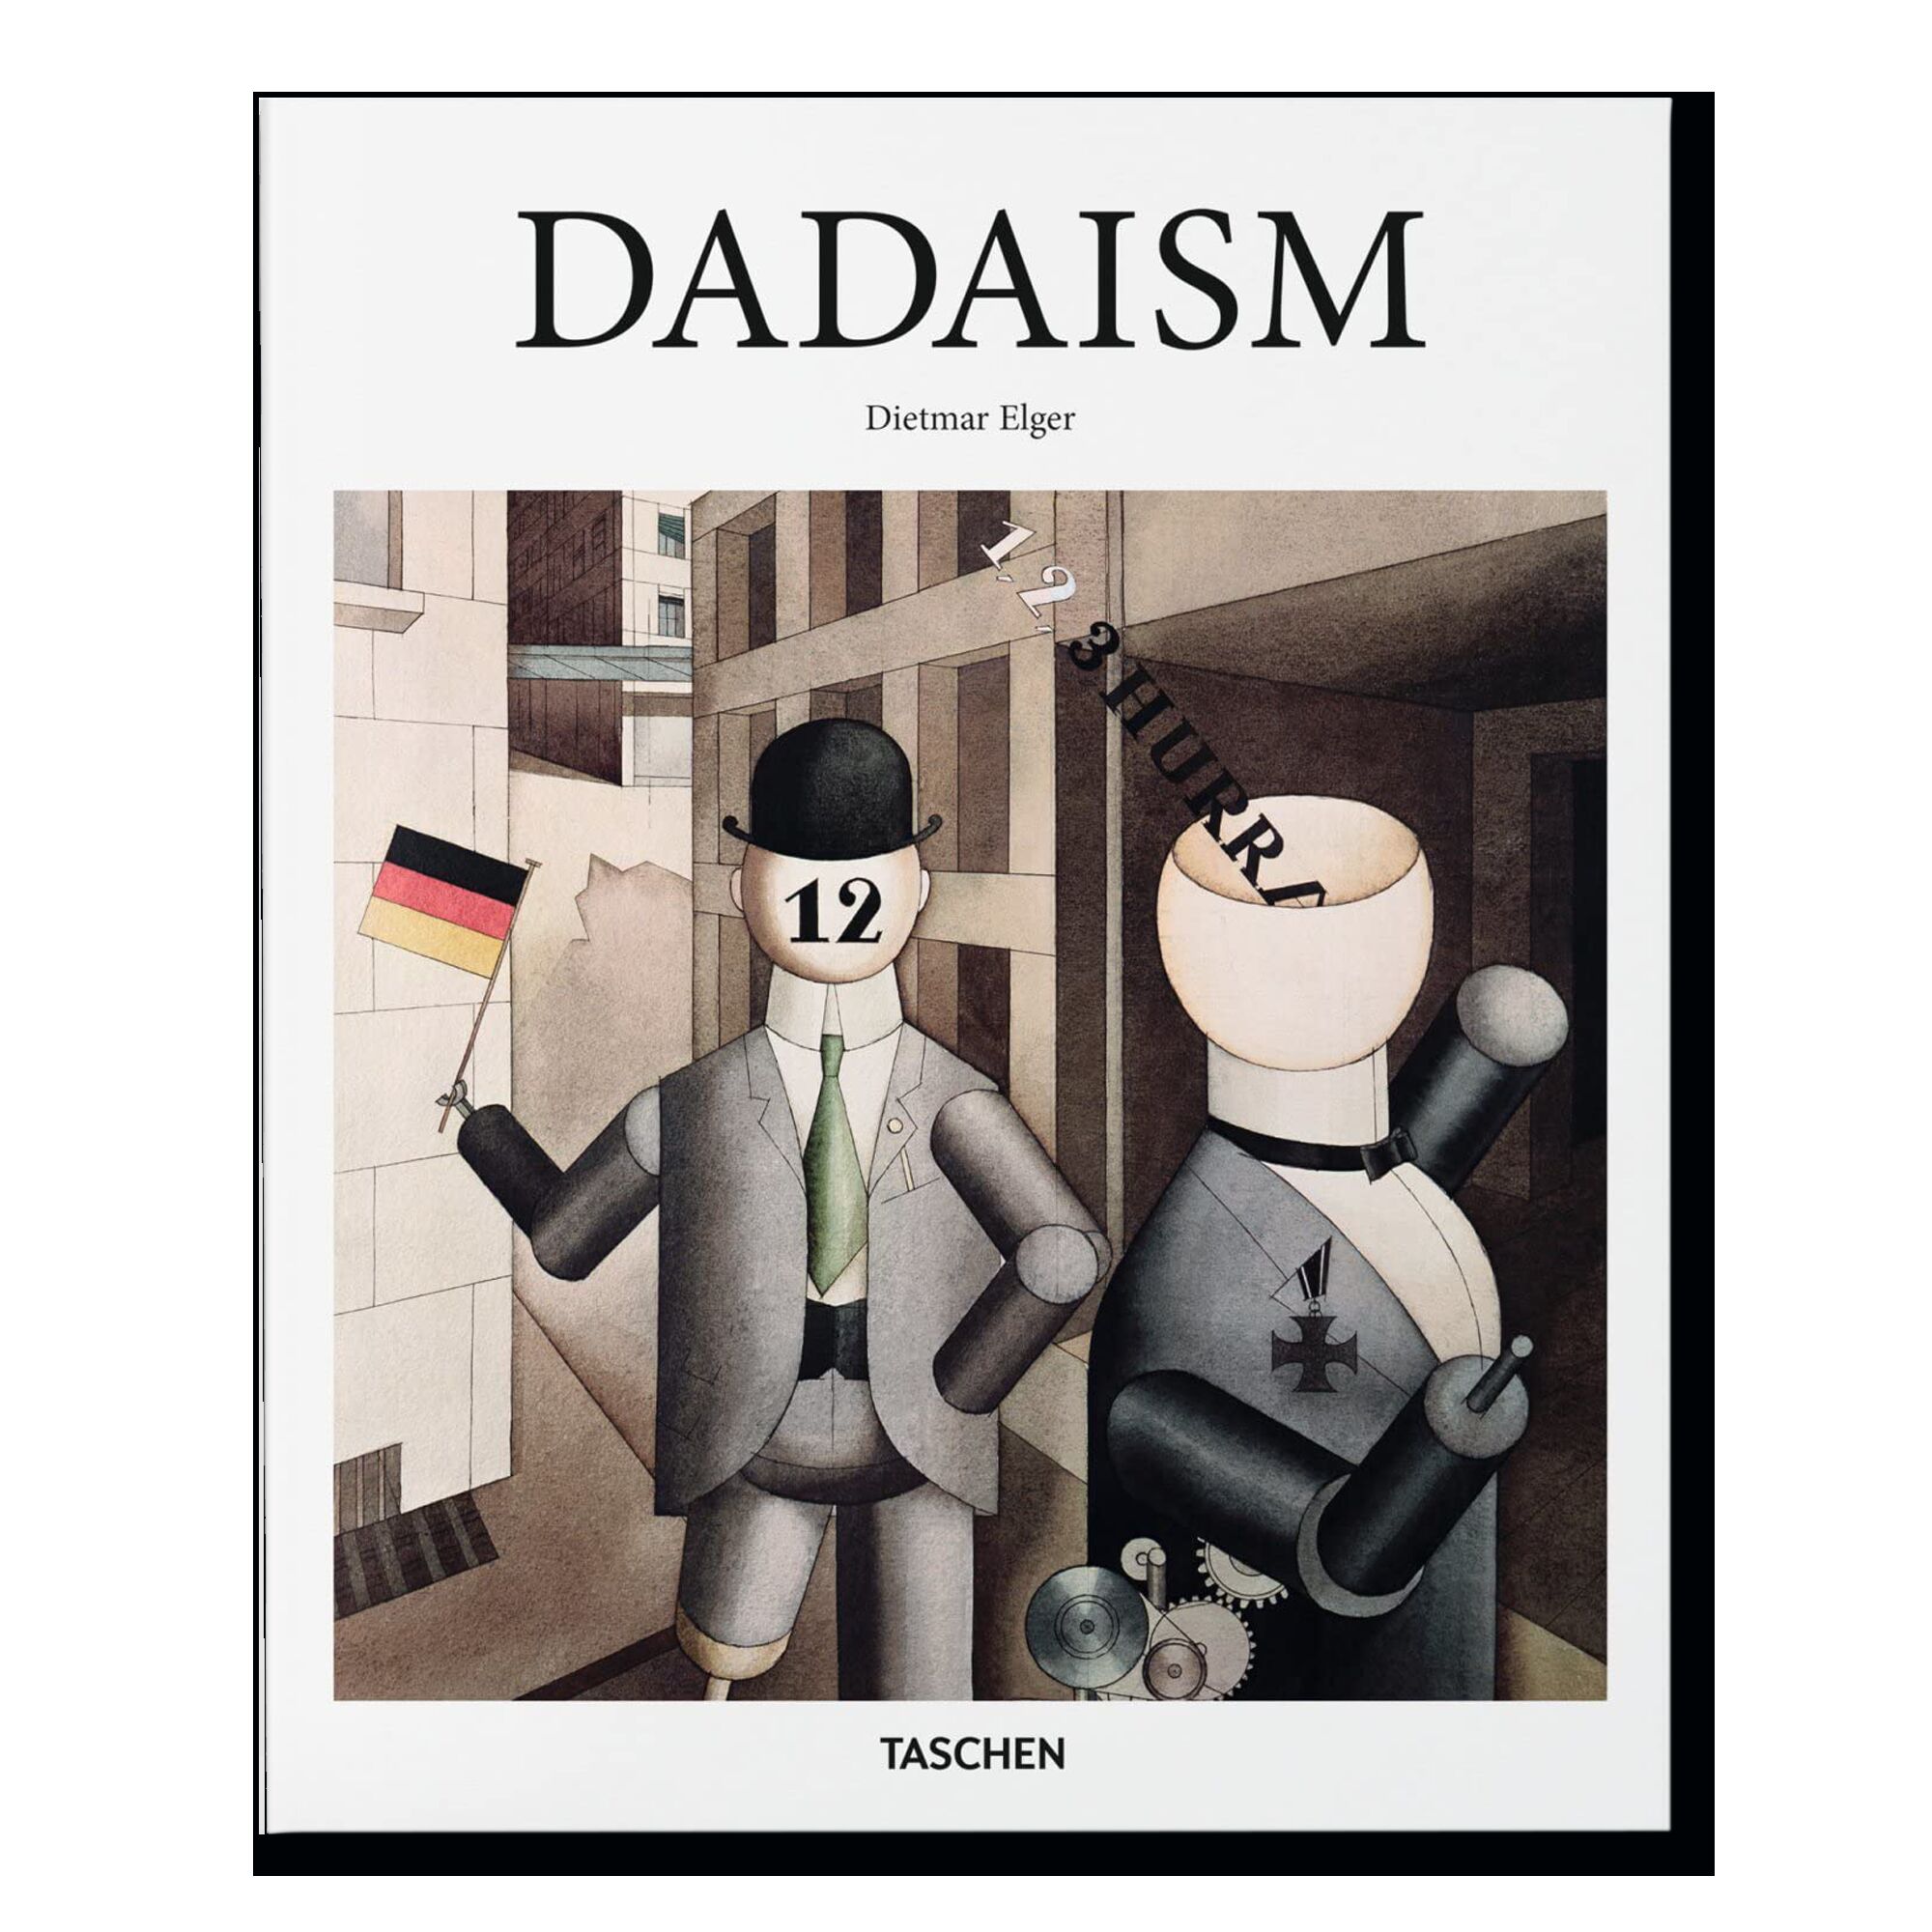 Dadaism (Basic Art Series)